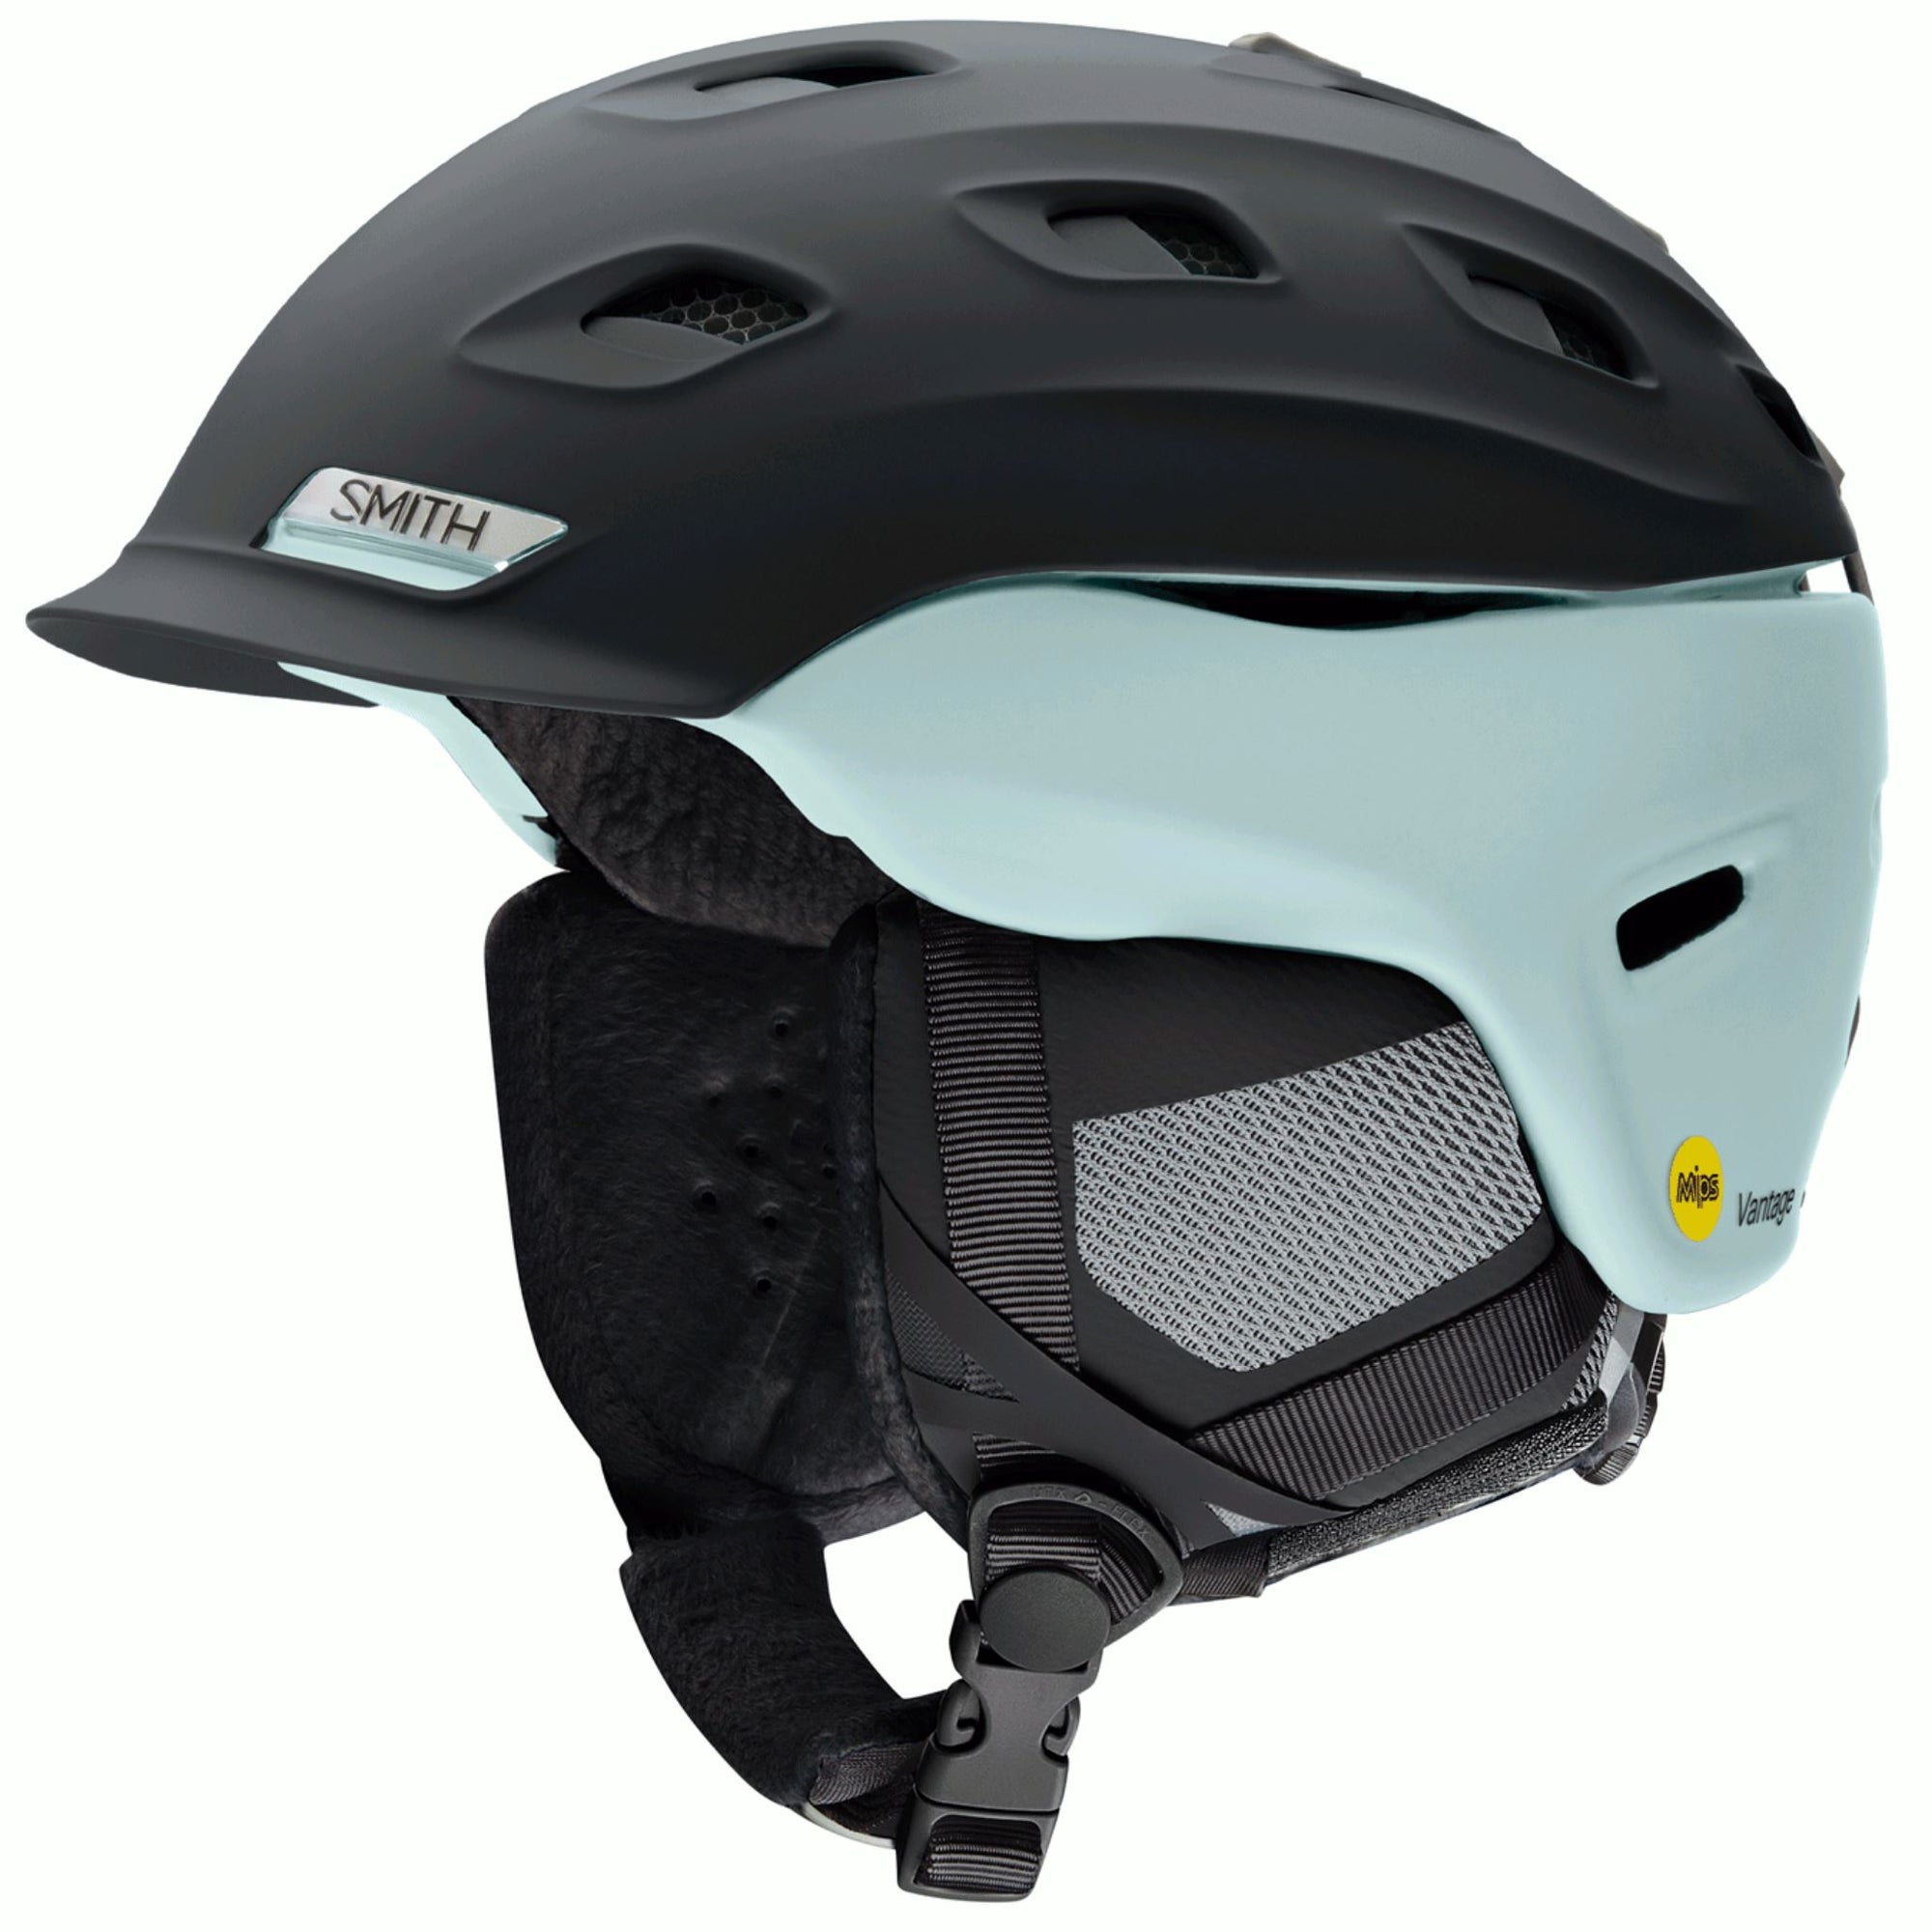 Womens Smith Vantage MIPS Helmet - Matte Black Pale Mint Helmets Smith S - (51-55cm) 